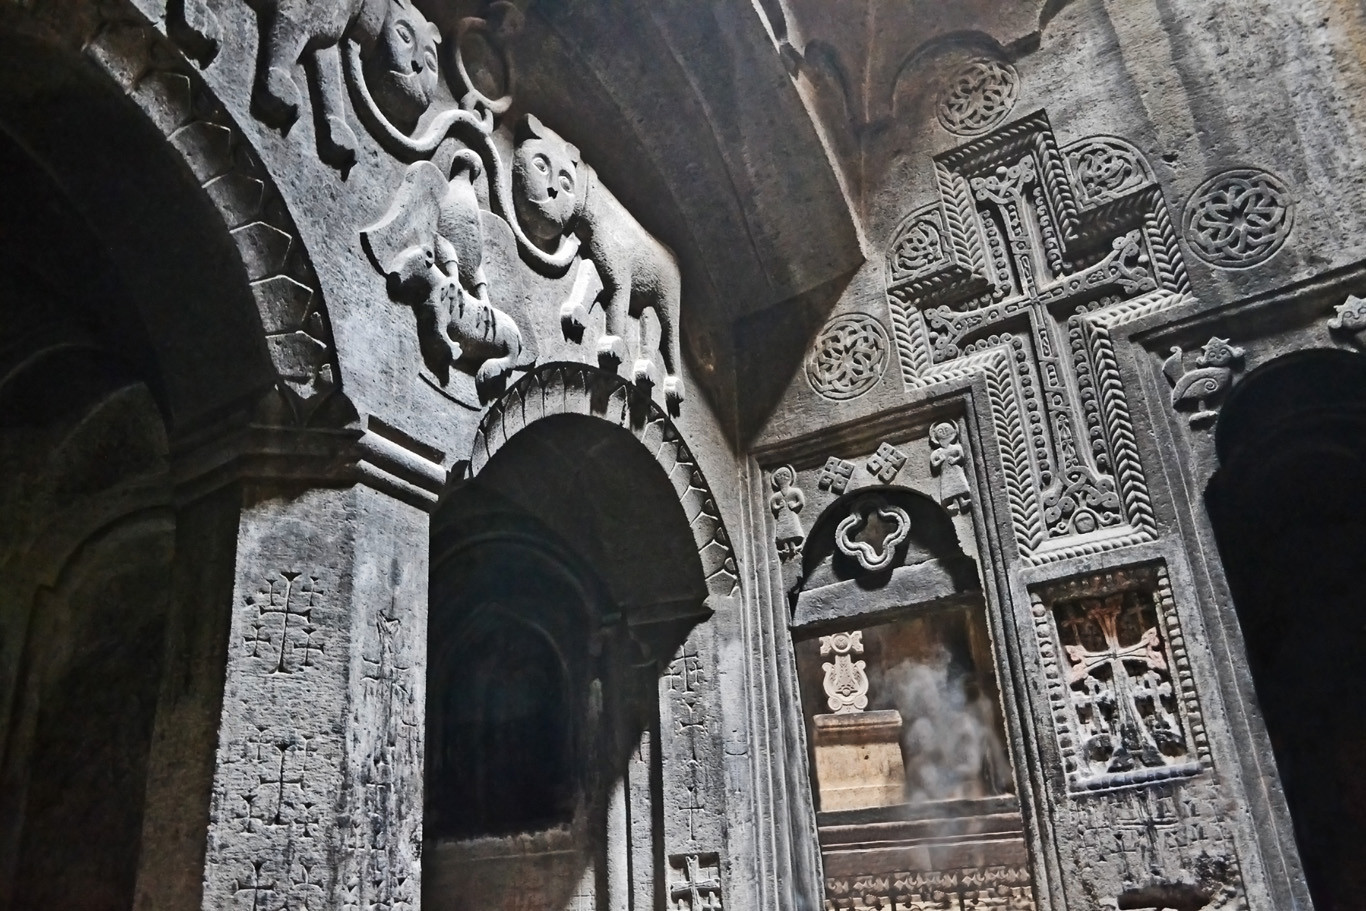 Geghard monastery Programma cultuur fotoreis Armenië